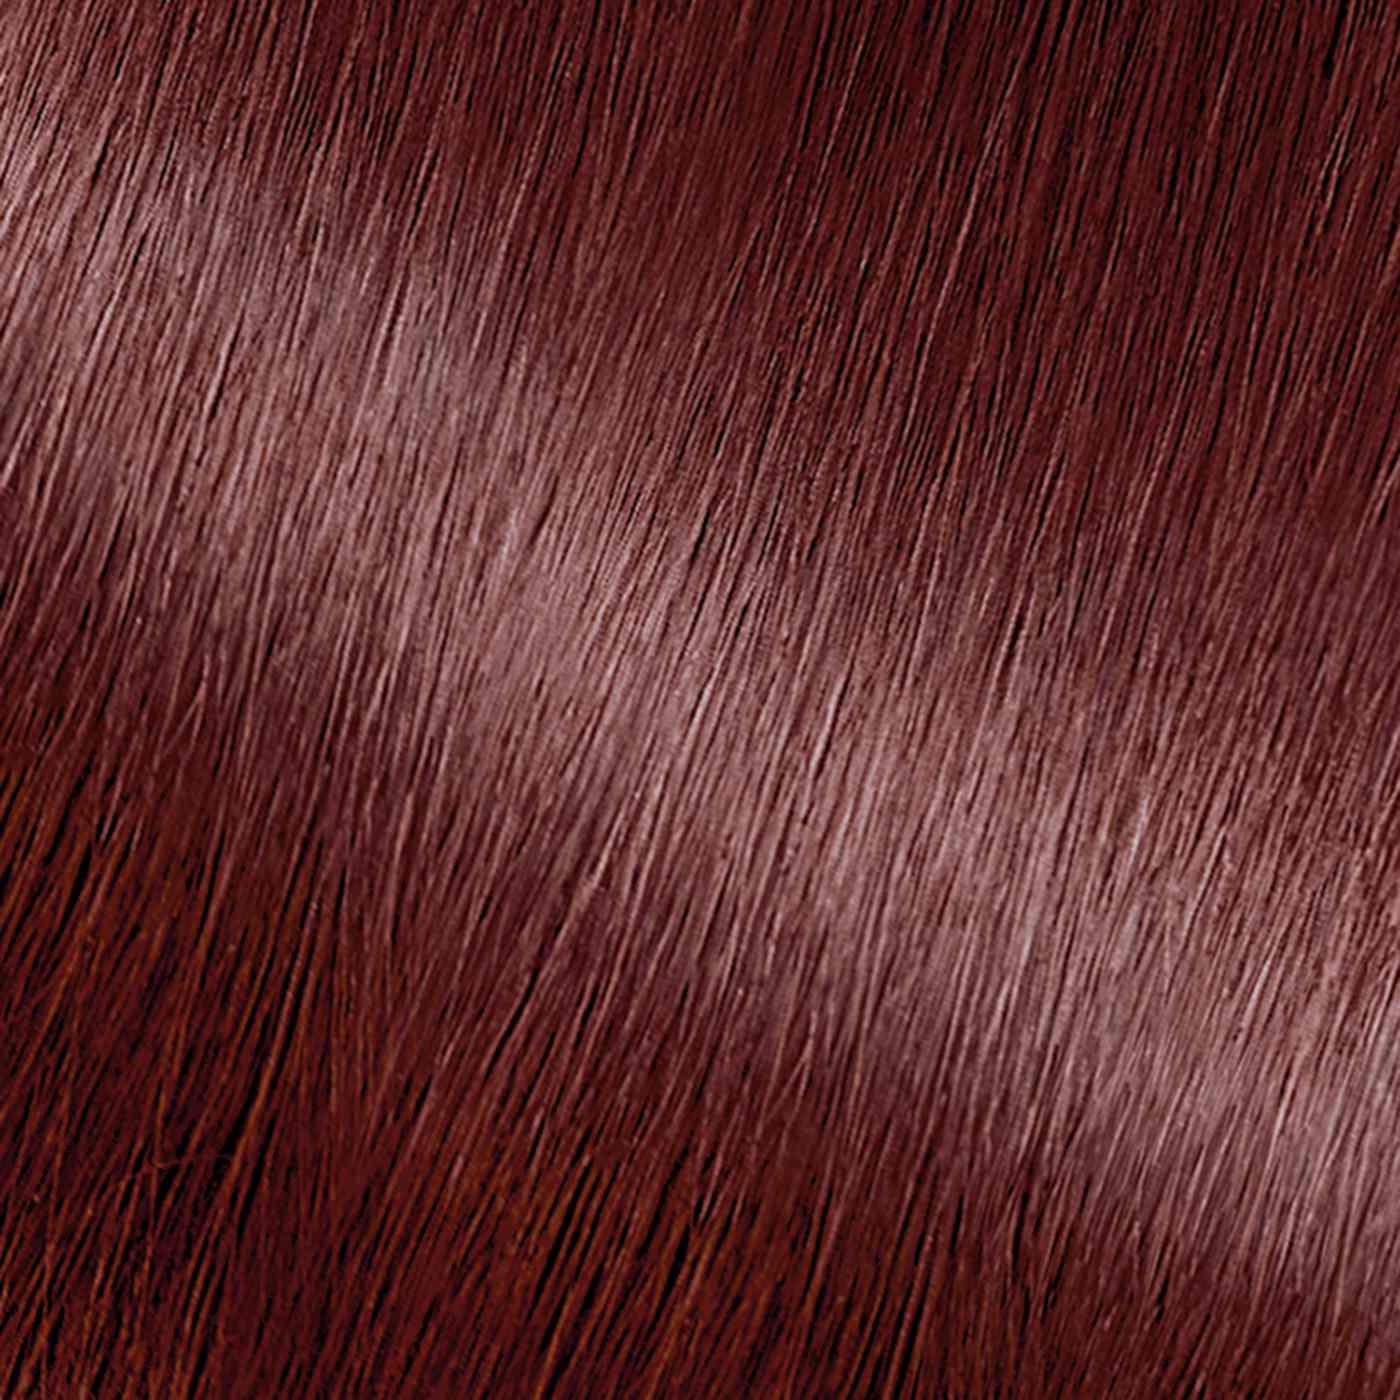 Garnier Nutrisse Nourishing Hair Color Creme with Triple Oils 452 Dark Reddish Brown; image 7 of 11